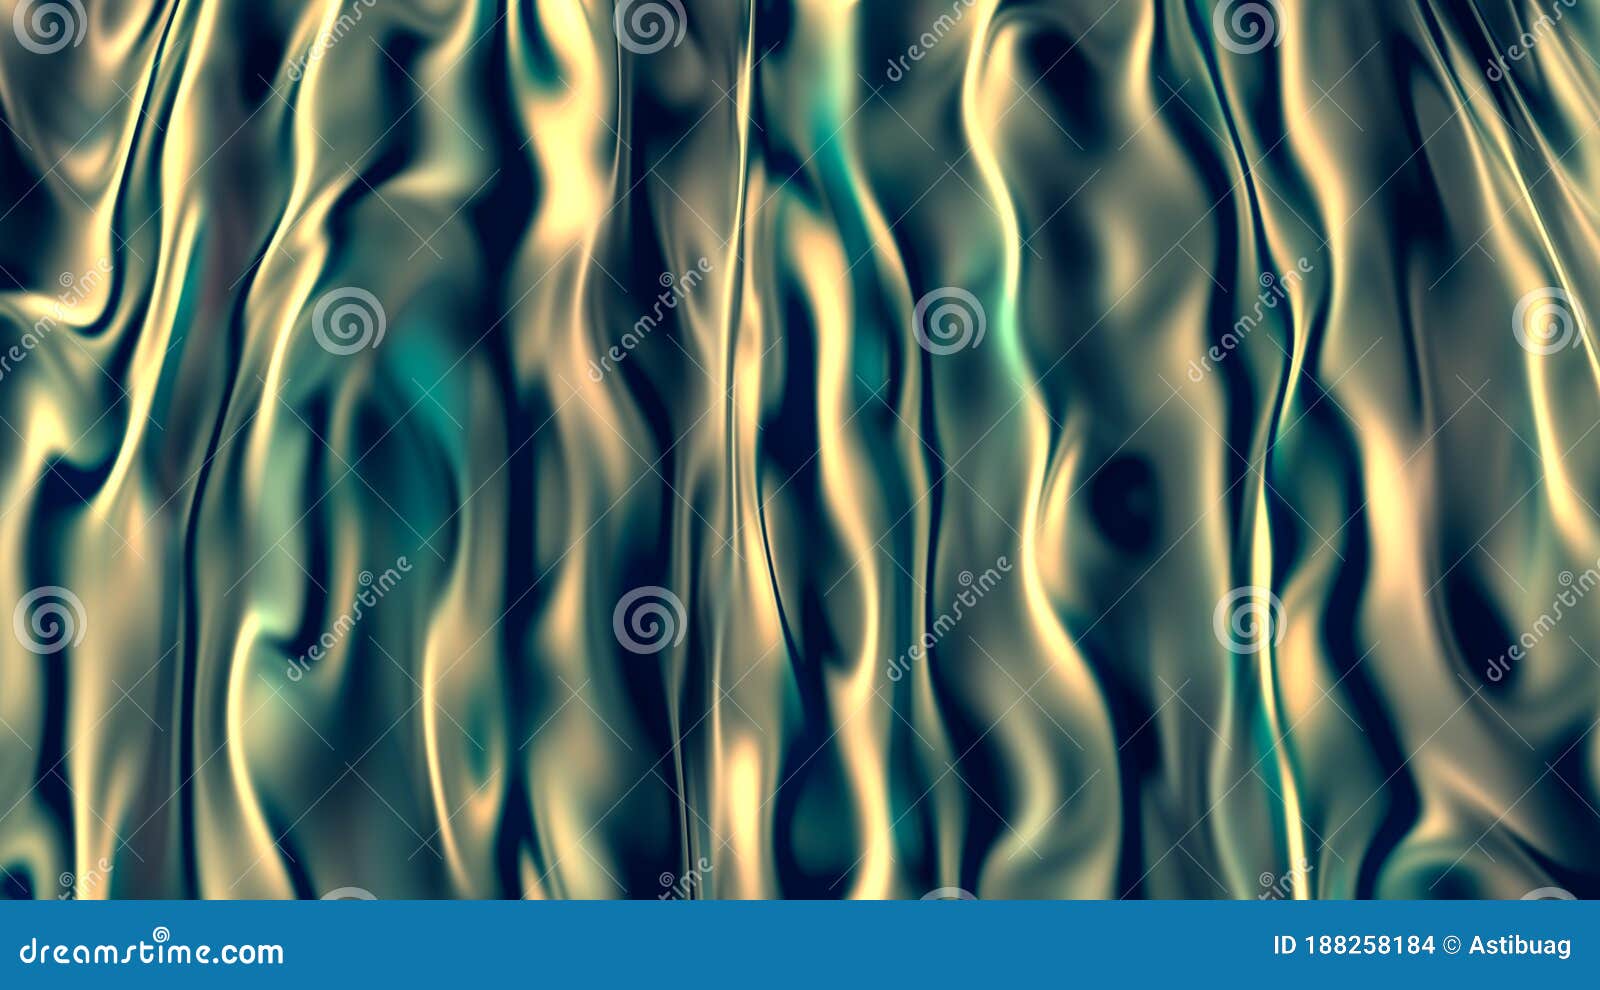 liquid metallic surface. 3d abstract mercurial object. fluid mercury swirl. wavy organic smooth 